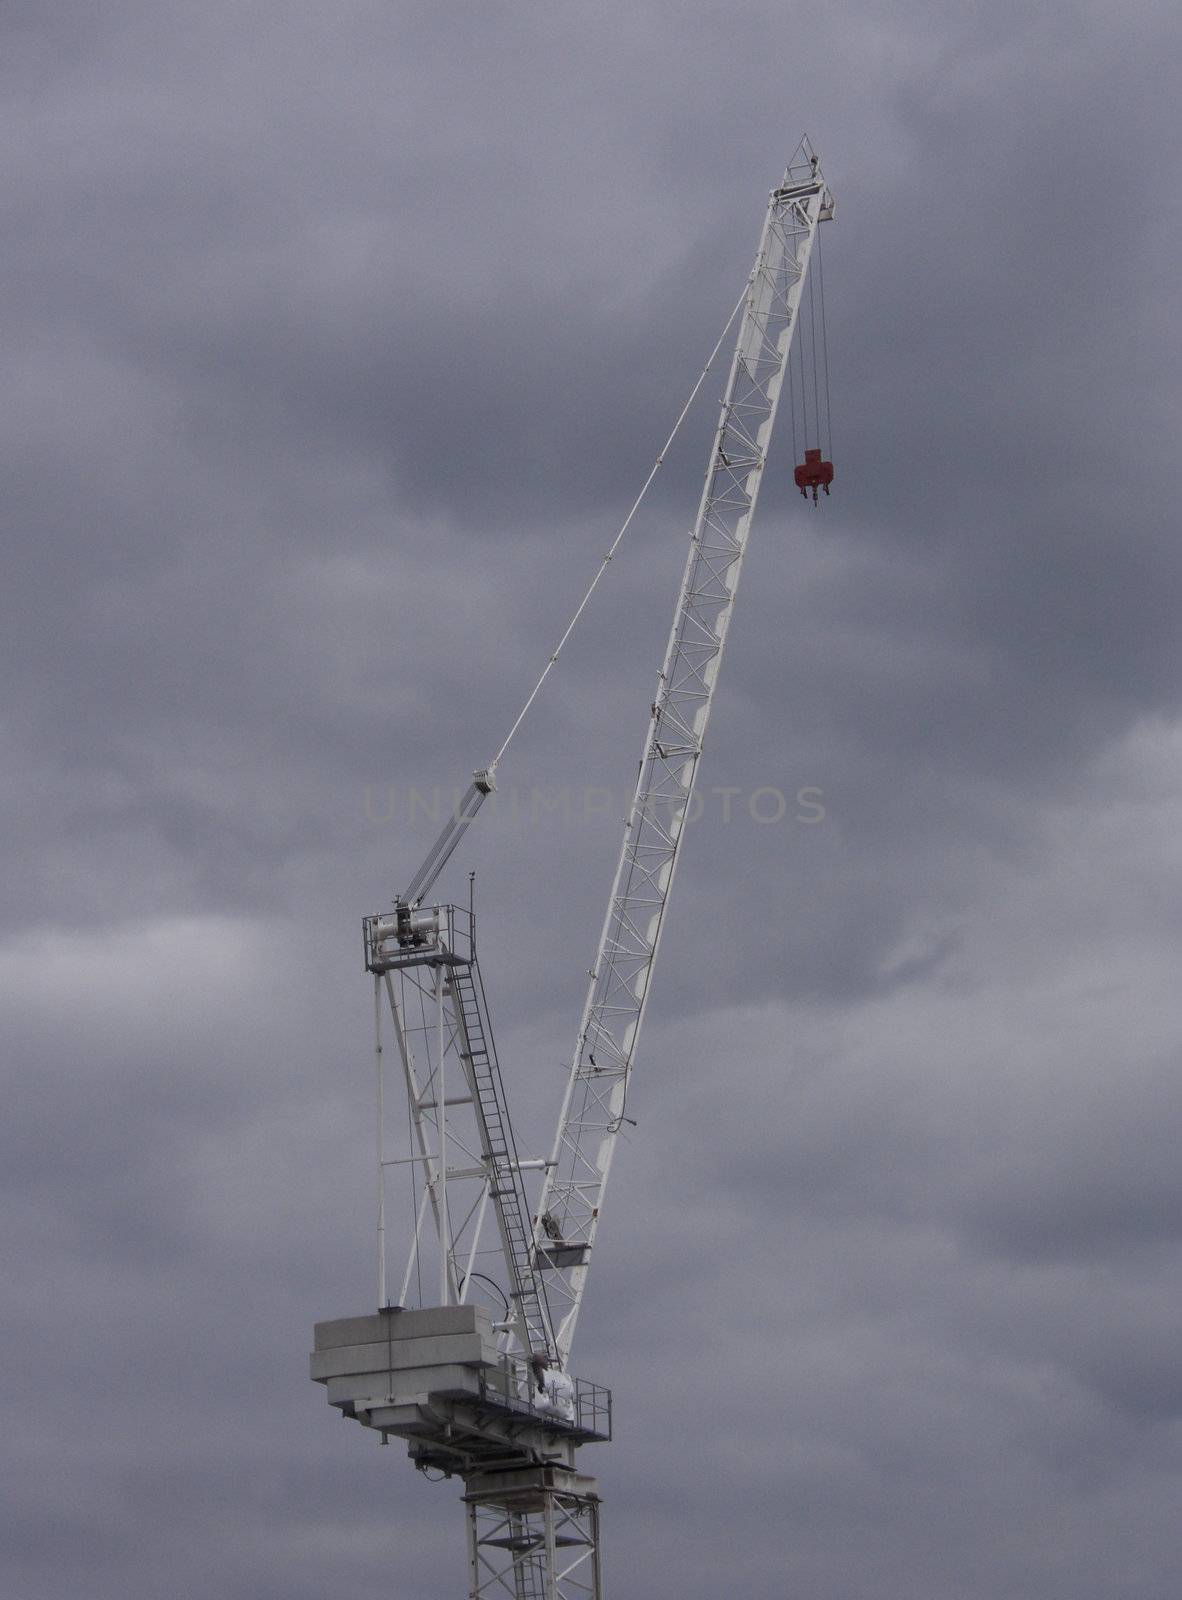 Tower crane against a cloudy sky.